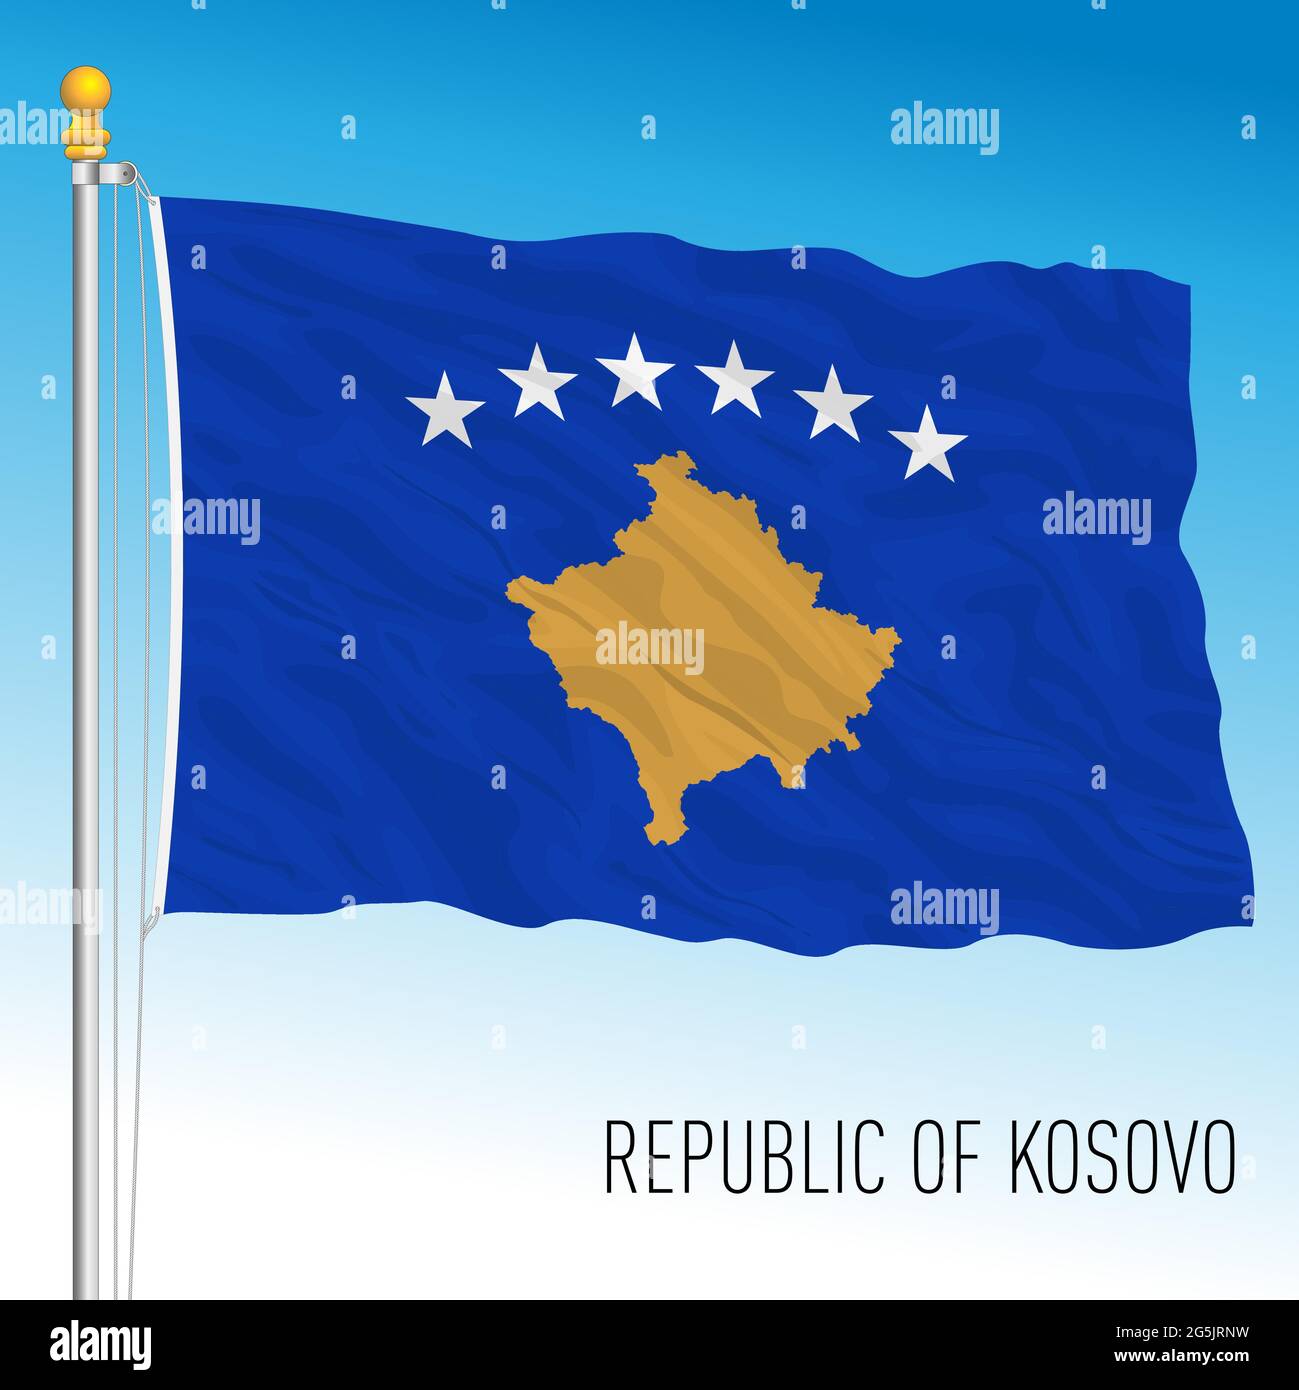 https://c8.alamy.com/compde/2g5jrnw/offizielle-nationalflagge-des-kosovo-europaisches-land-vektorgrafik-2g5jrnw.jpg